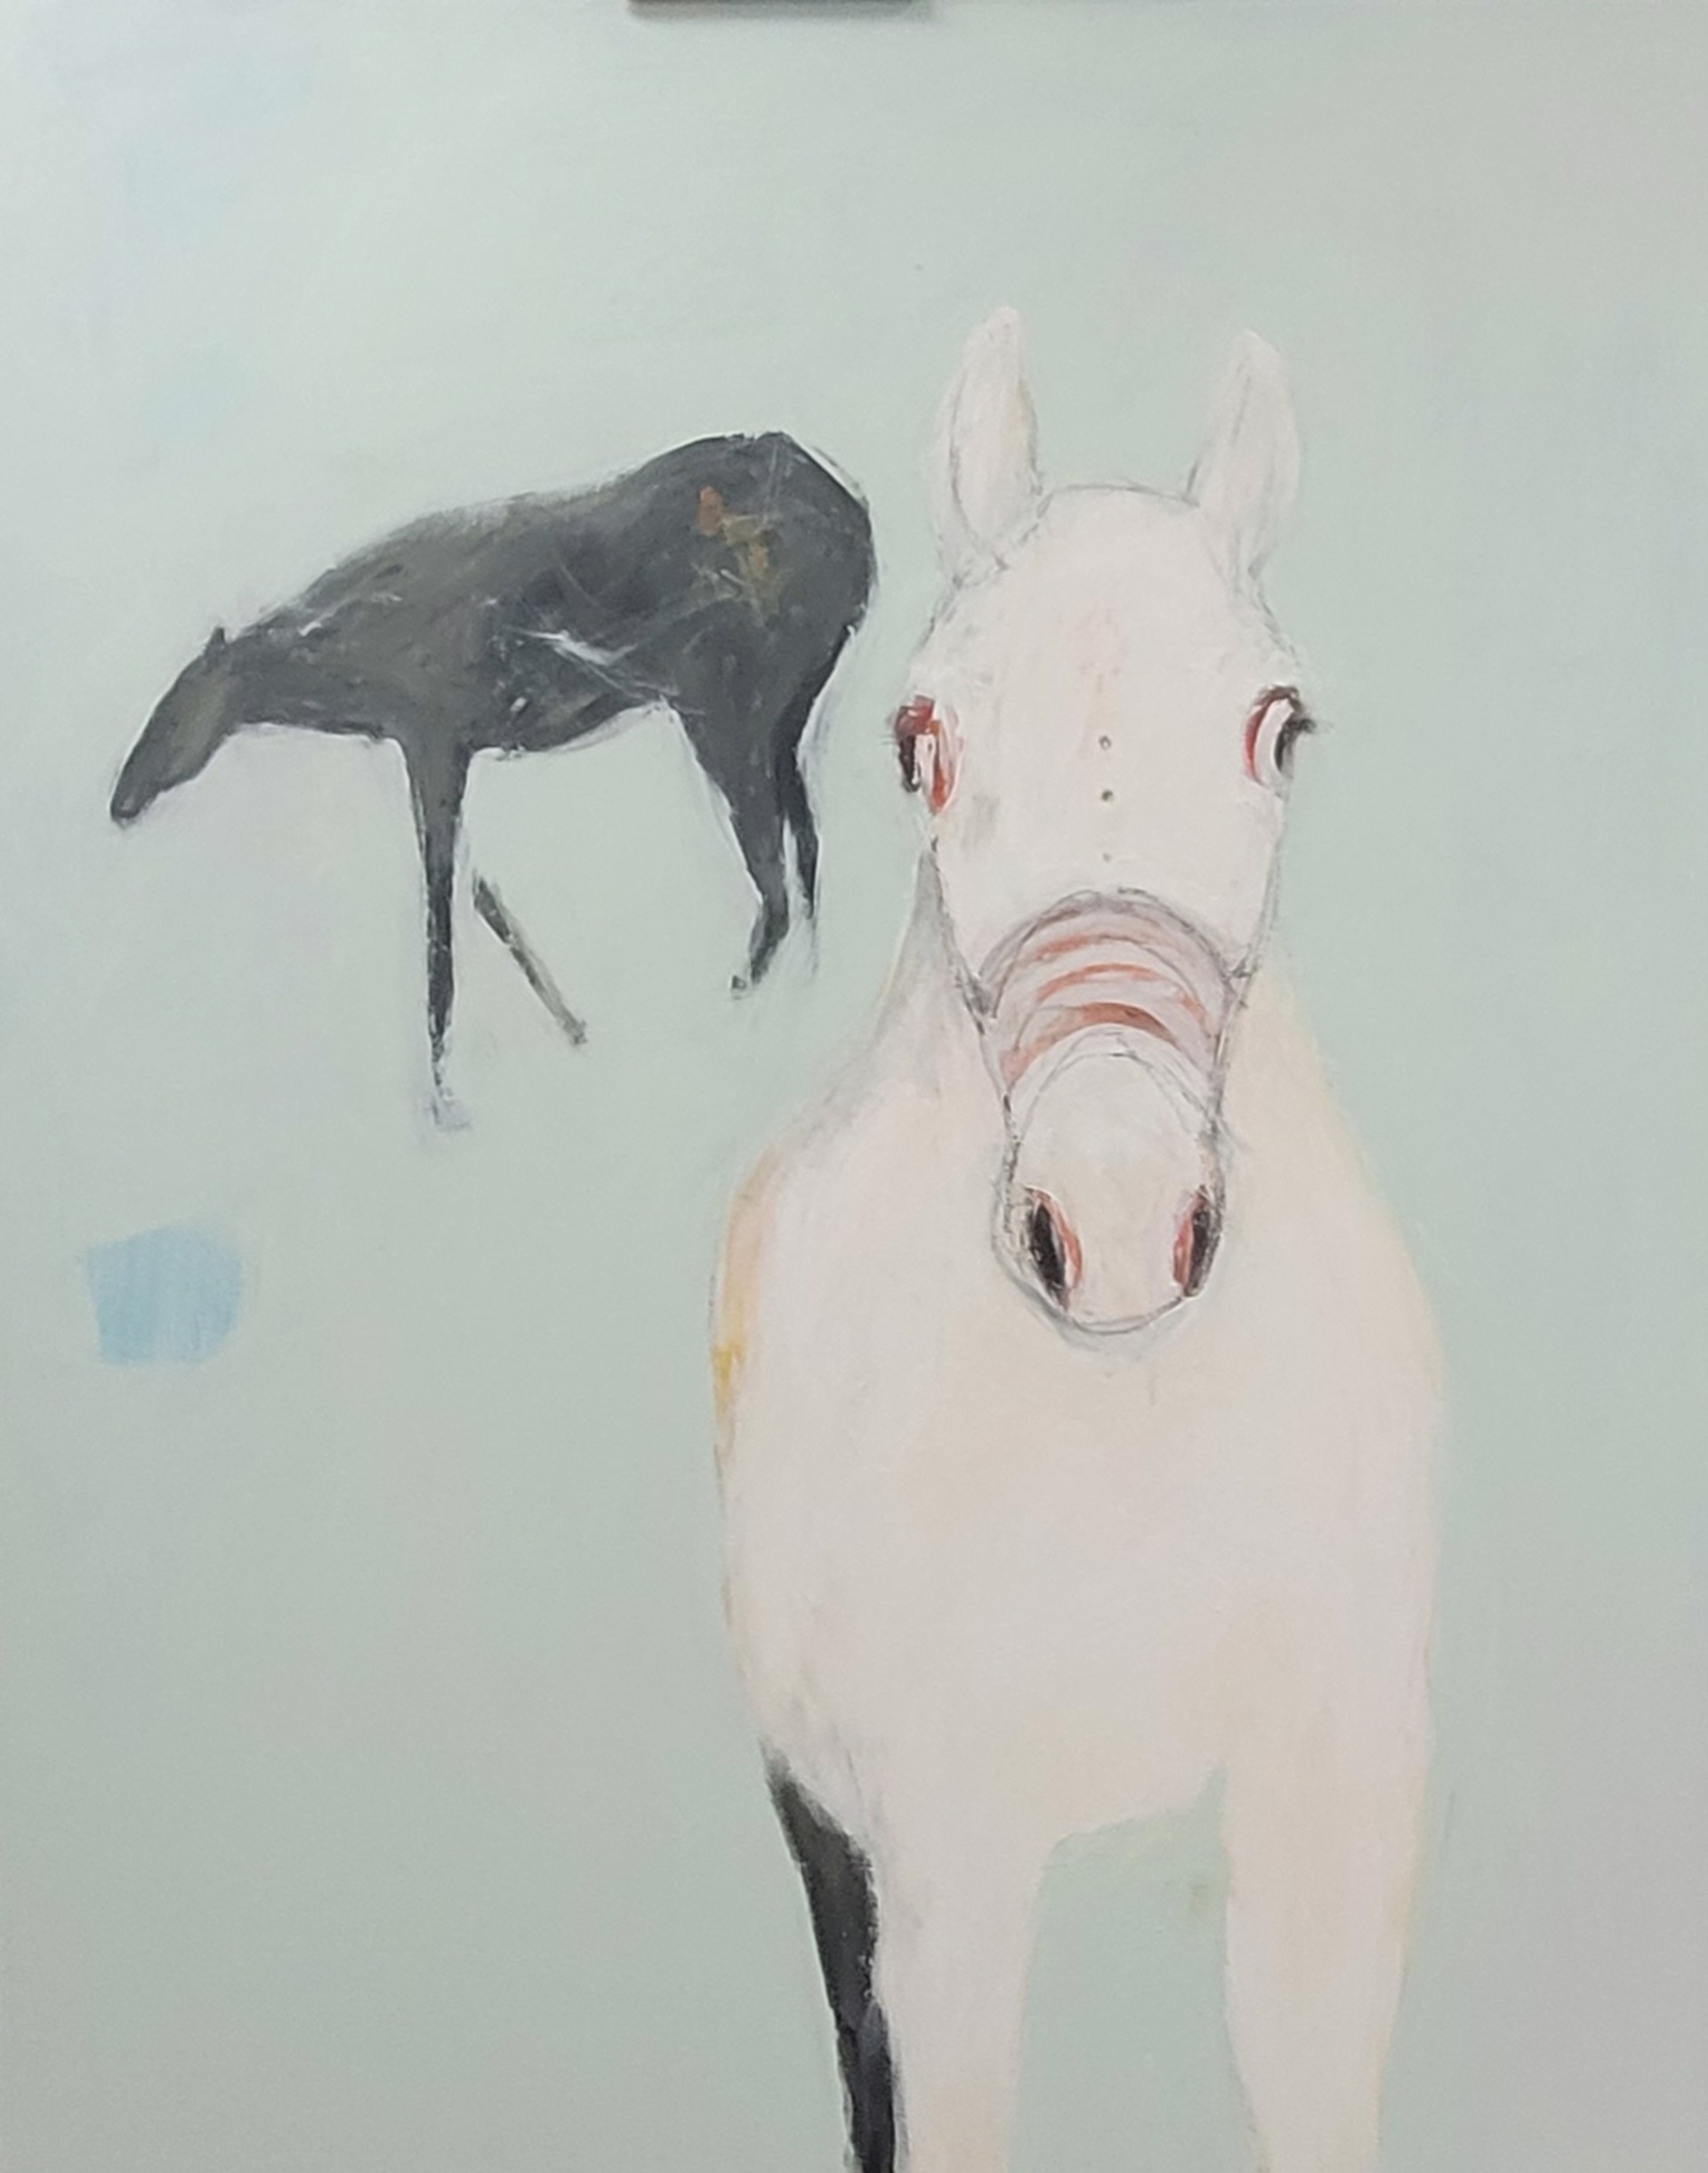 Black Pony No. 2 by Kathy Taylor